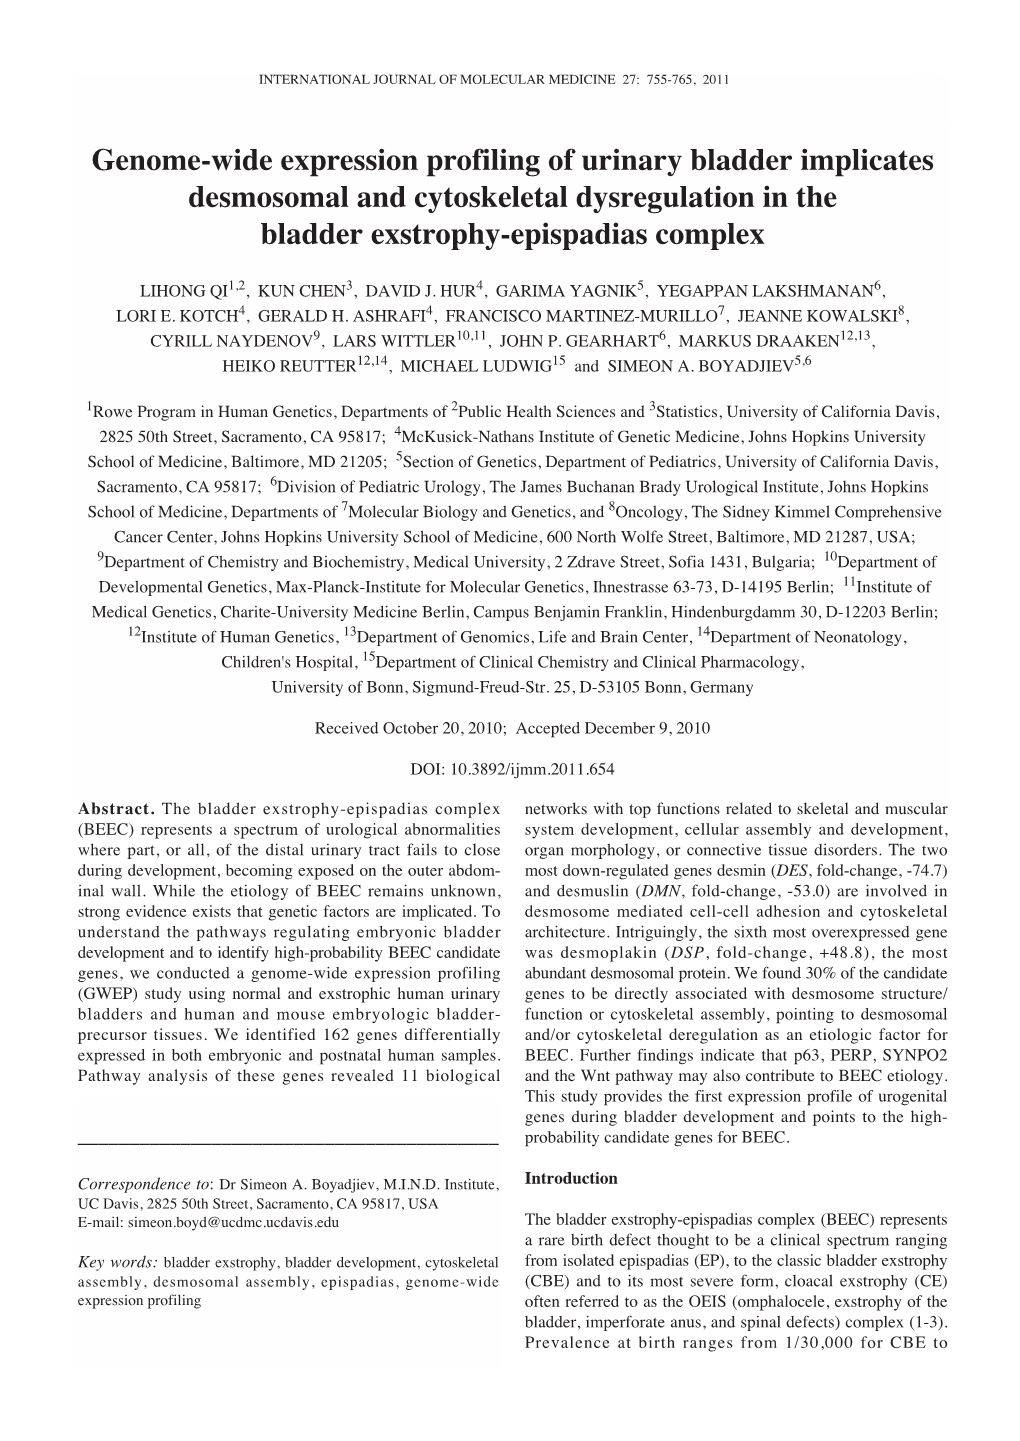 Genome-Wide Expression Profiling of Urinary Bladder Implicates Desmosomal and Cytoskeletal Dysregulation in the Bladder Exstrophy-Epispadias Complex